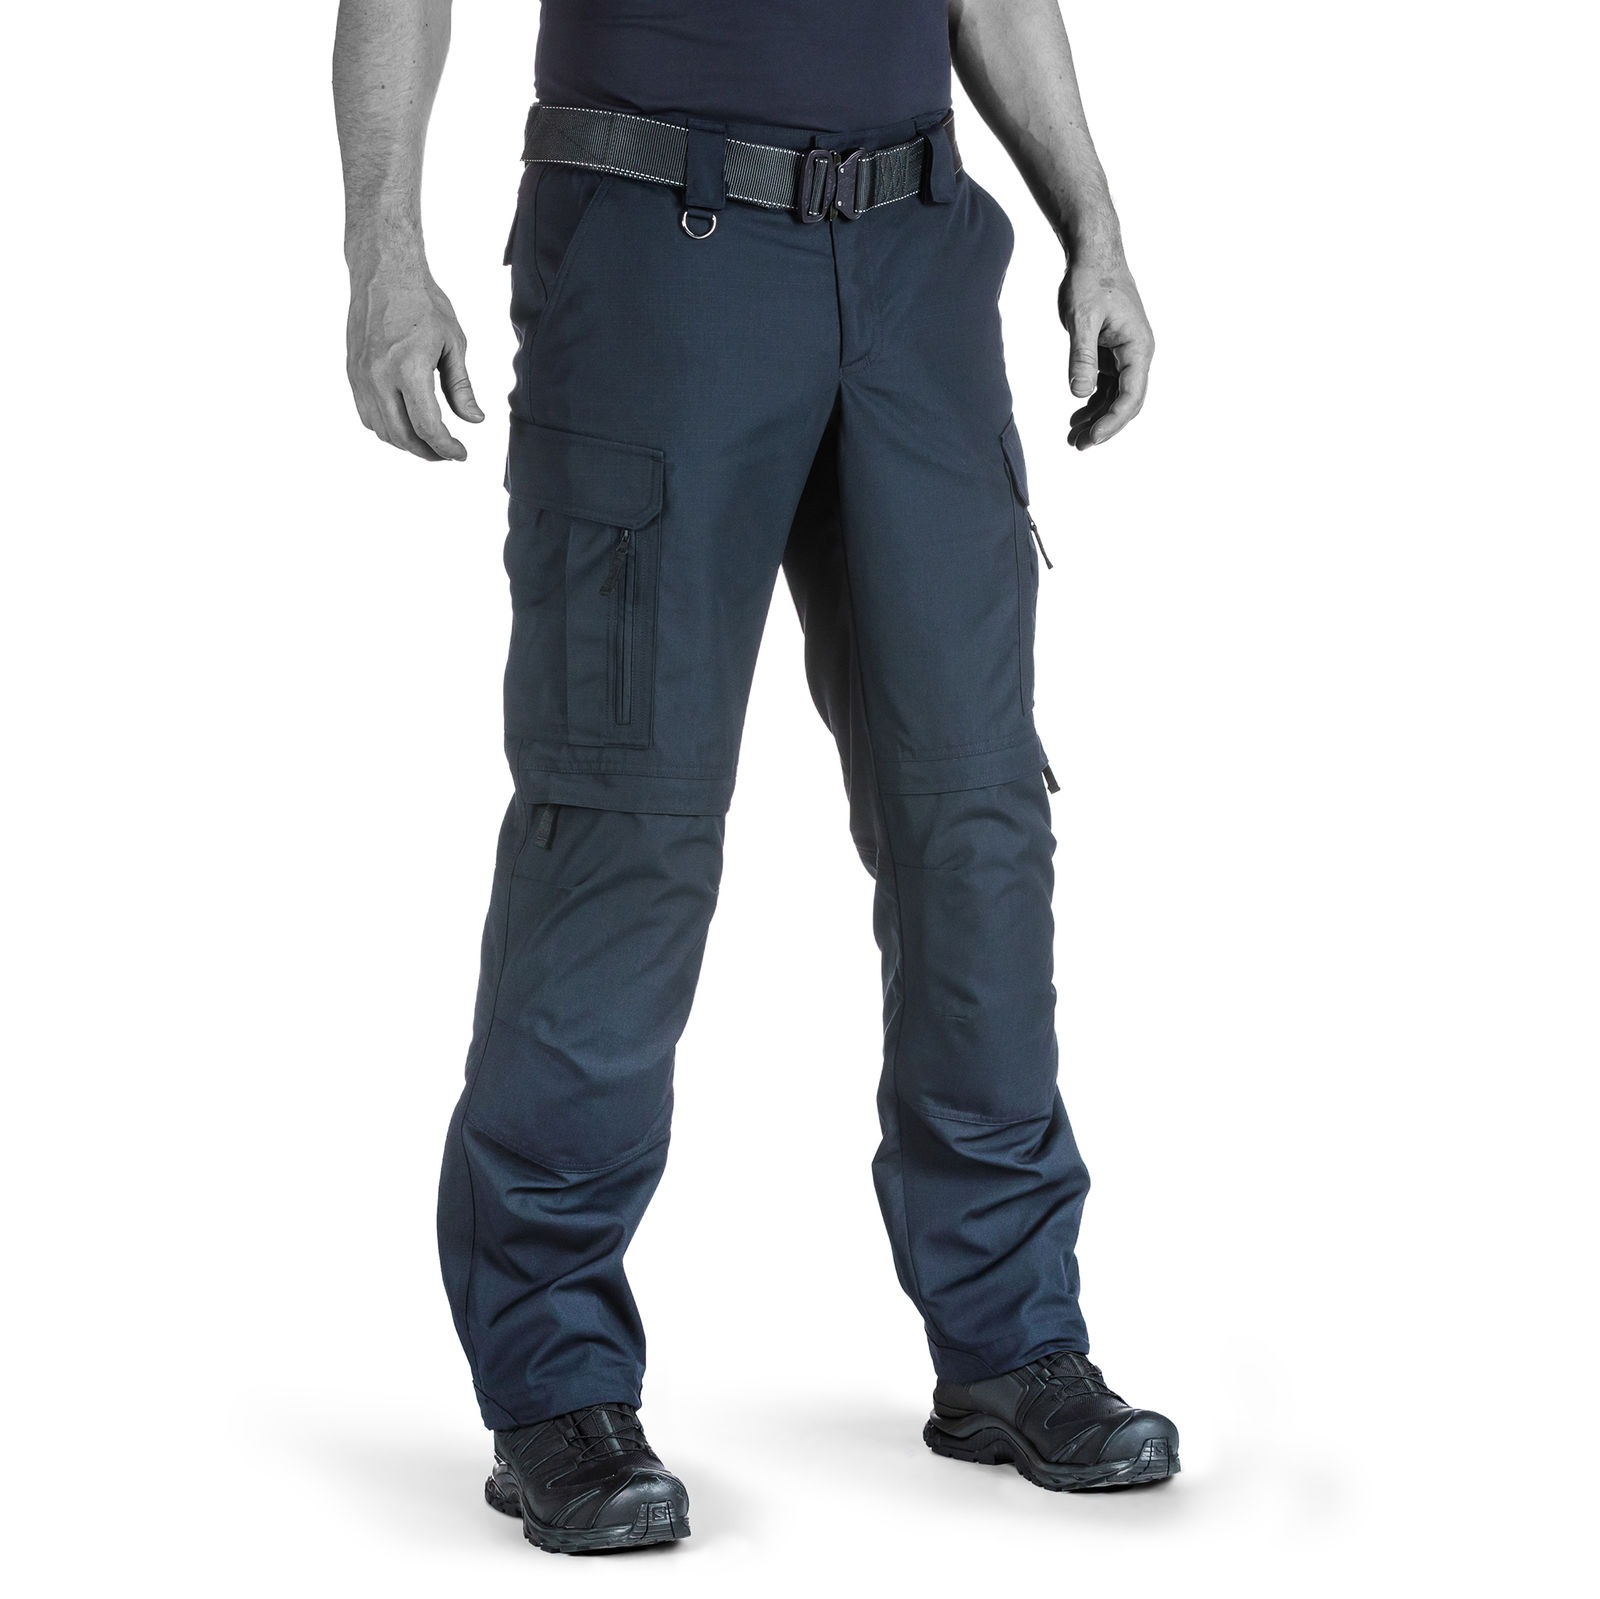 Men039s Navy Blue Fatigue Pant  Rothco 6 Pocket Tactical Military BDU  Work Pants  eBay